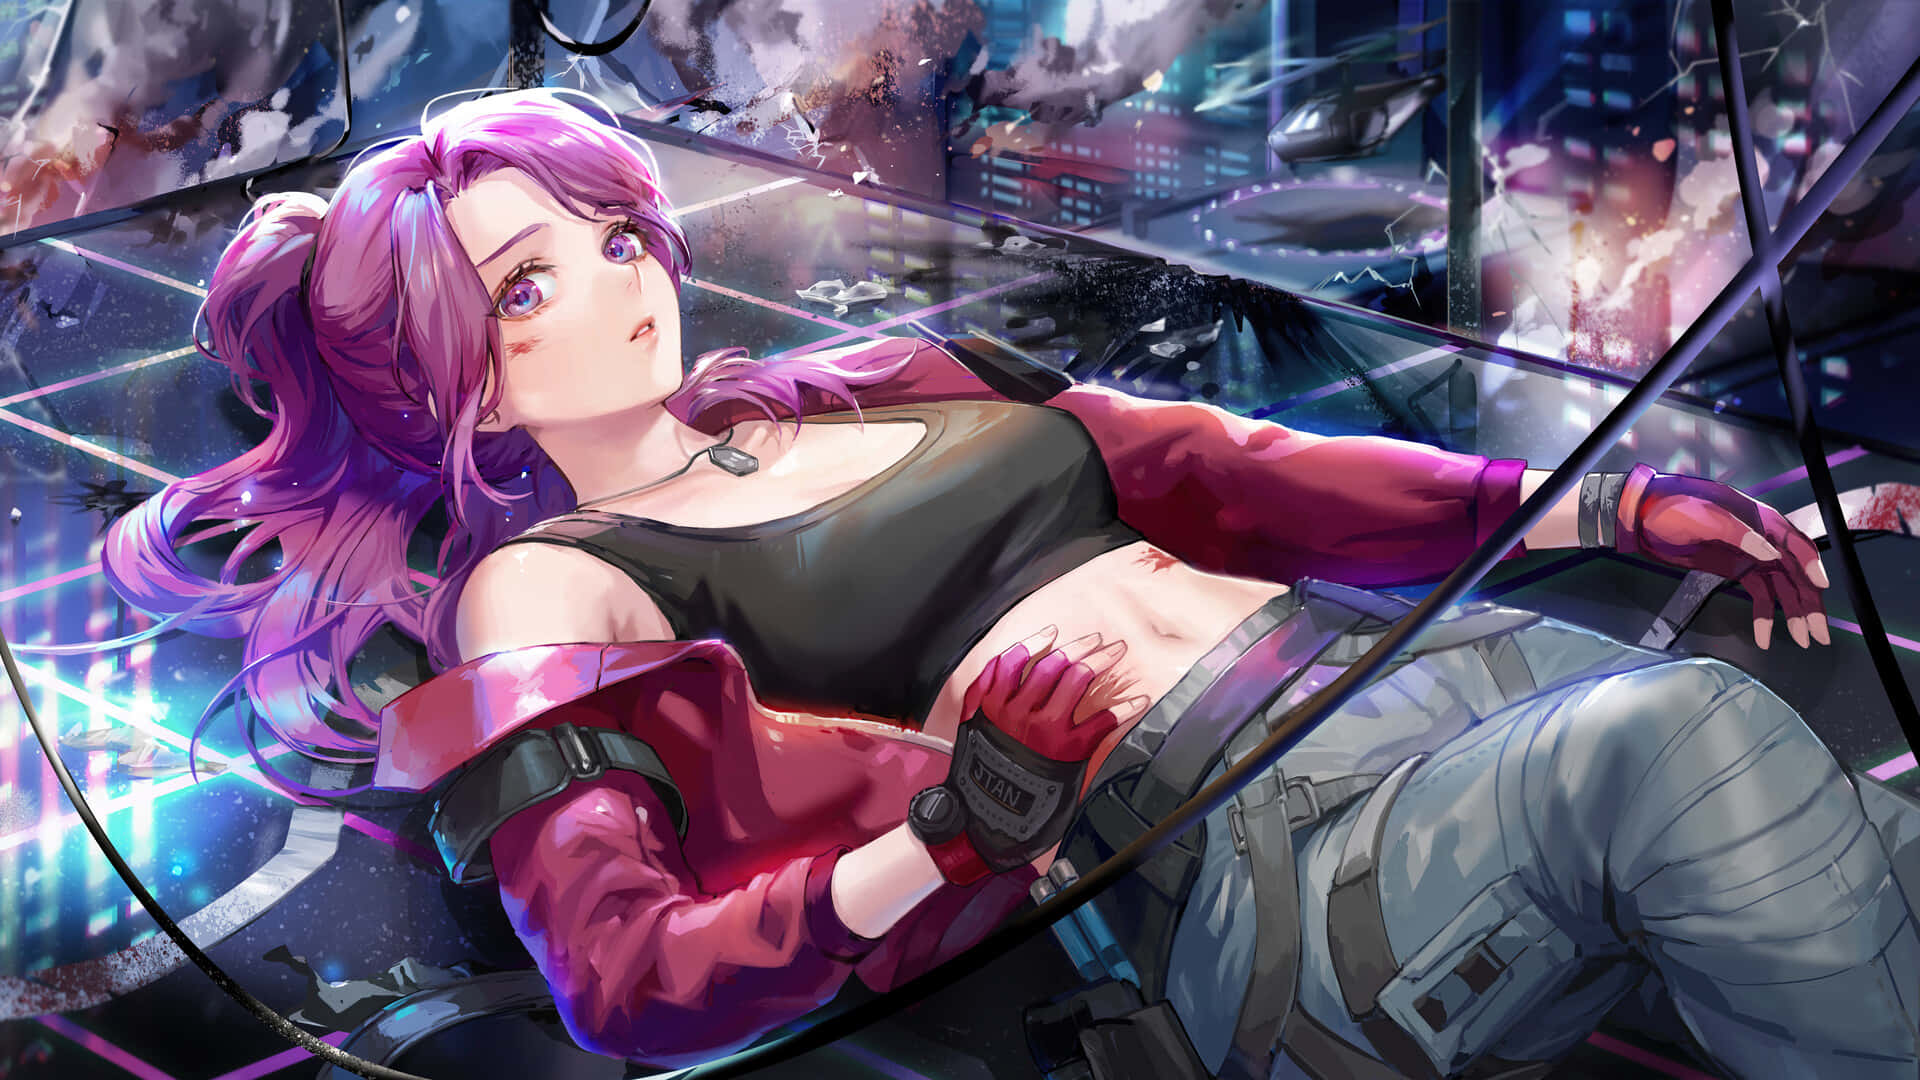 Cyberpunk Anime Girlin Futuristic City Wallpaper